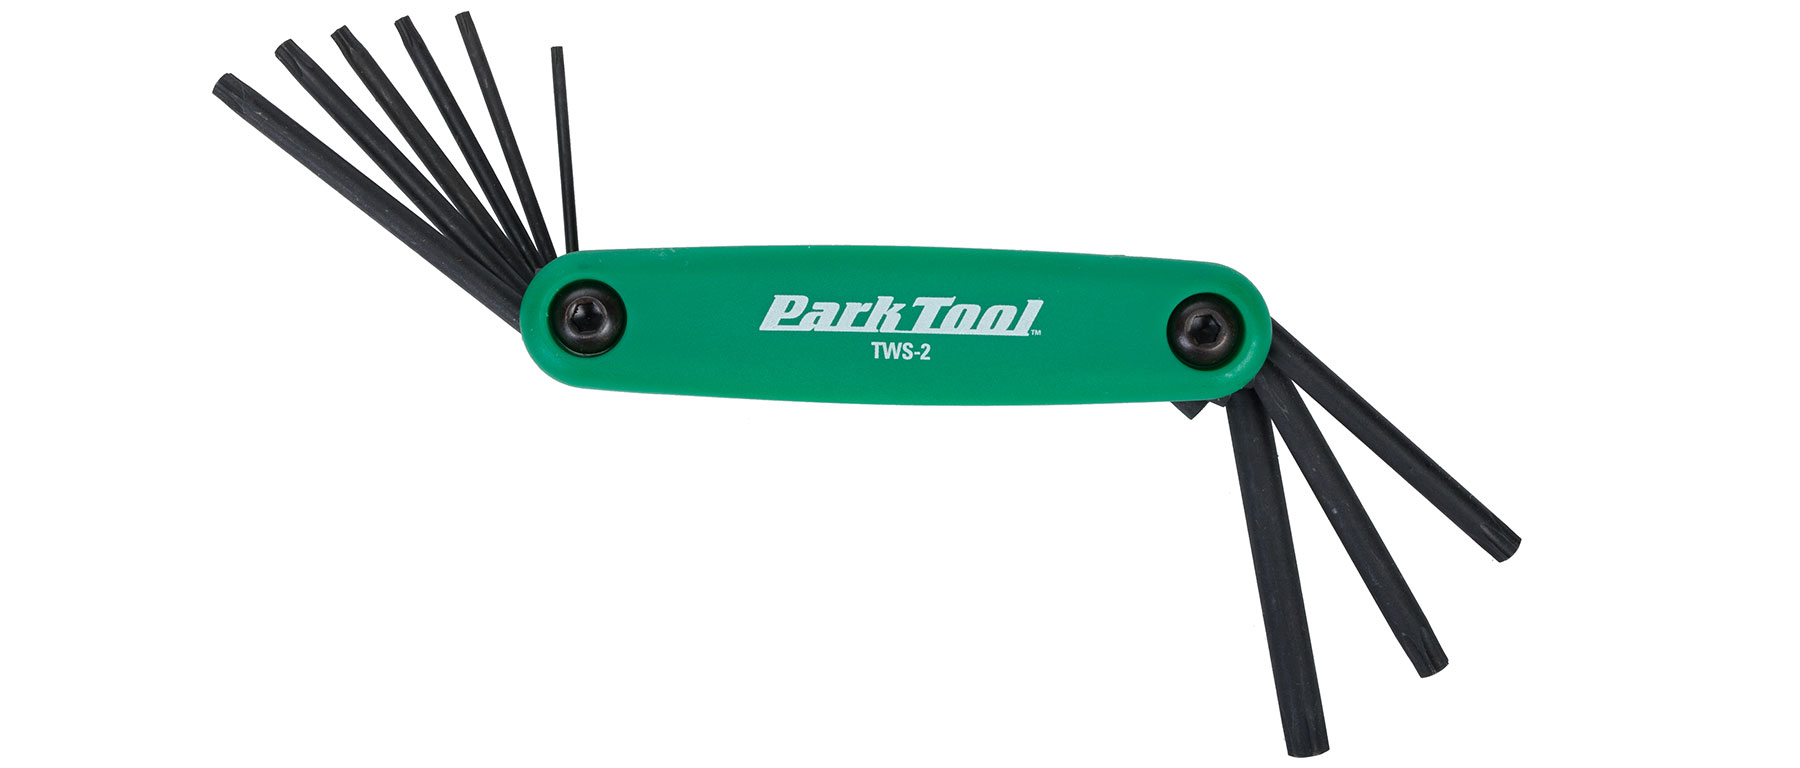 Park Tool TWS-2 Foldable Torx Wrench Set